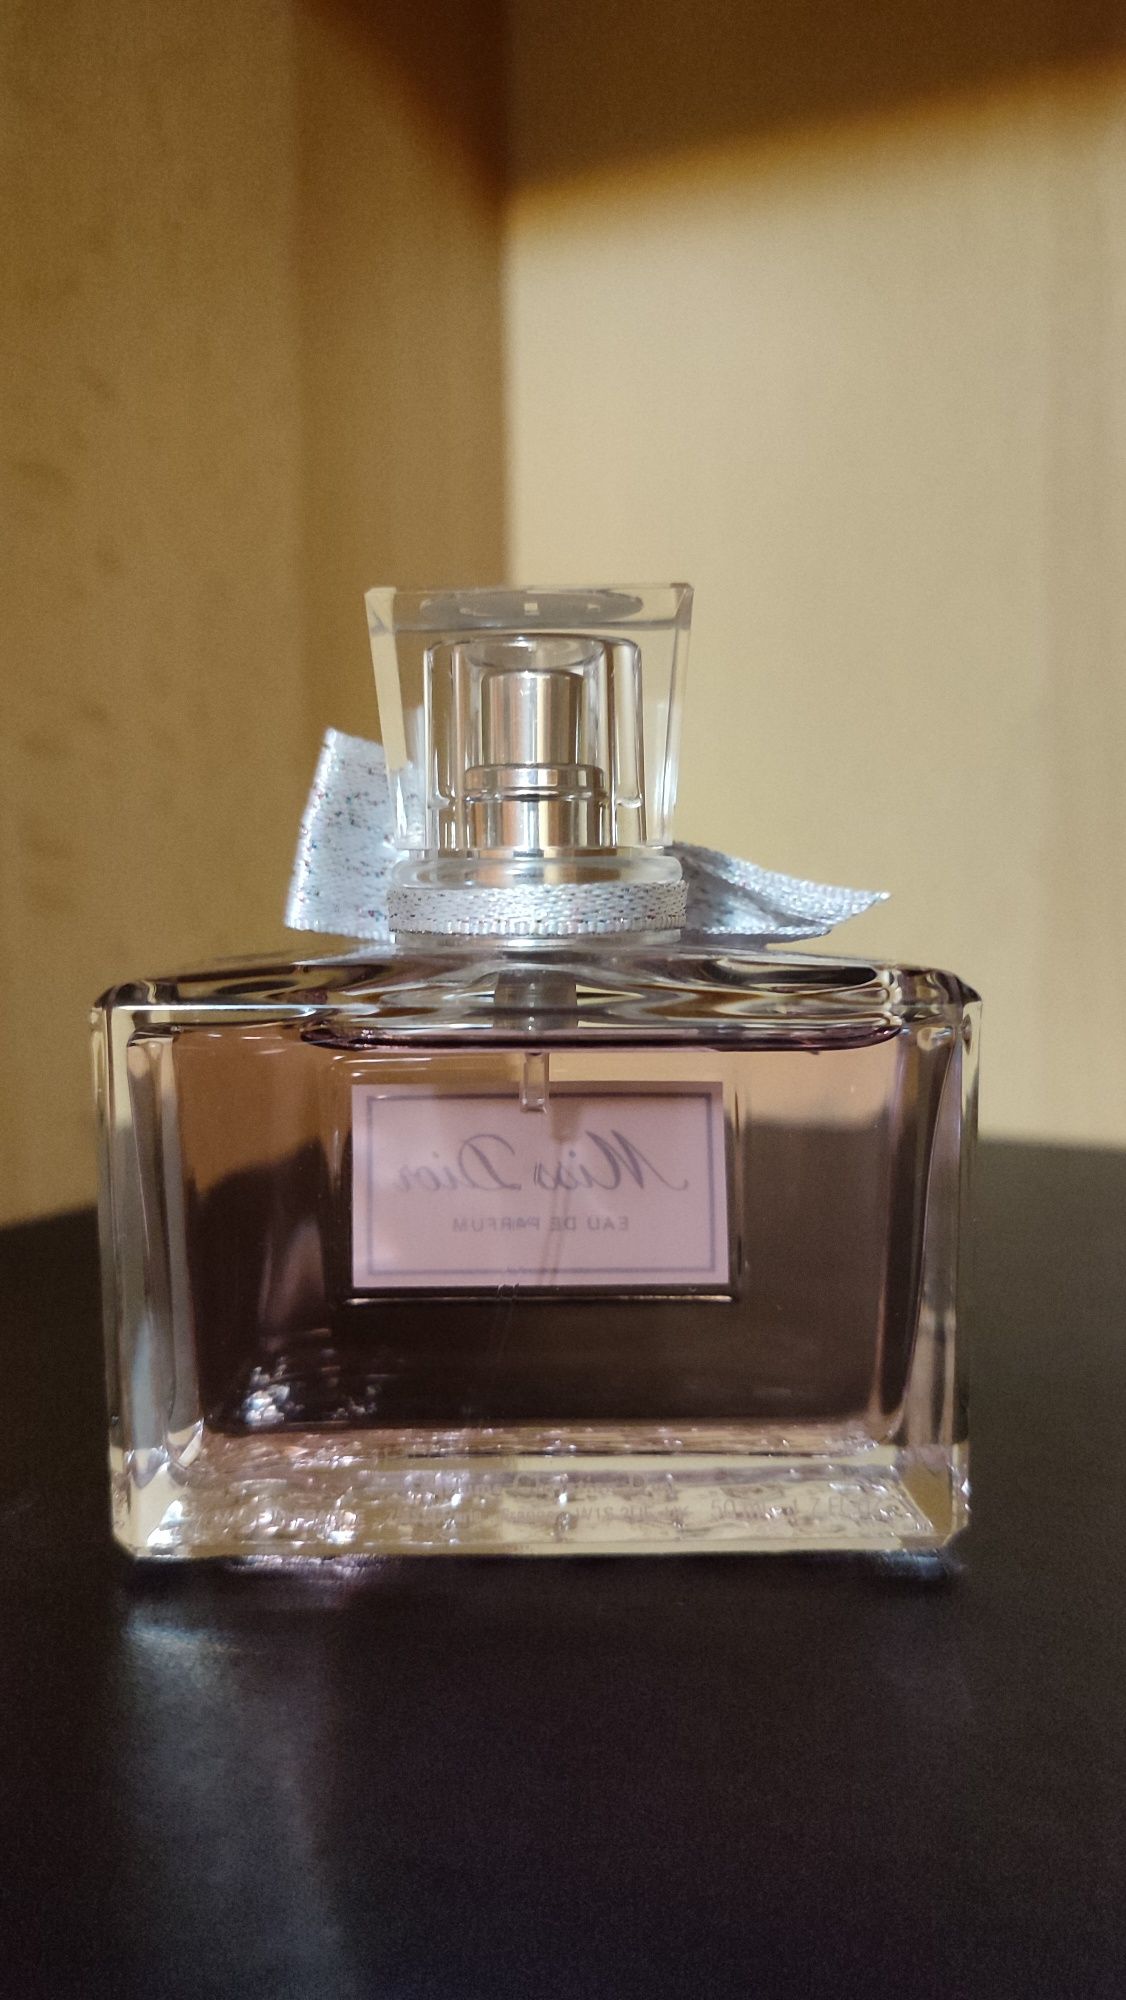 Perfum Miss Dior woda perfumowana 50ml